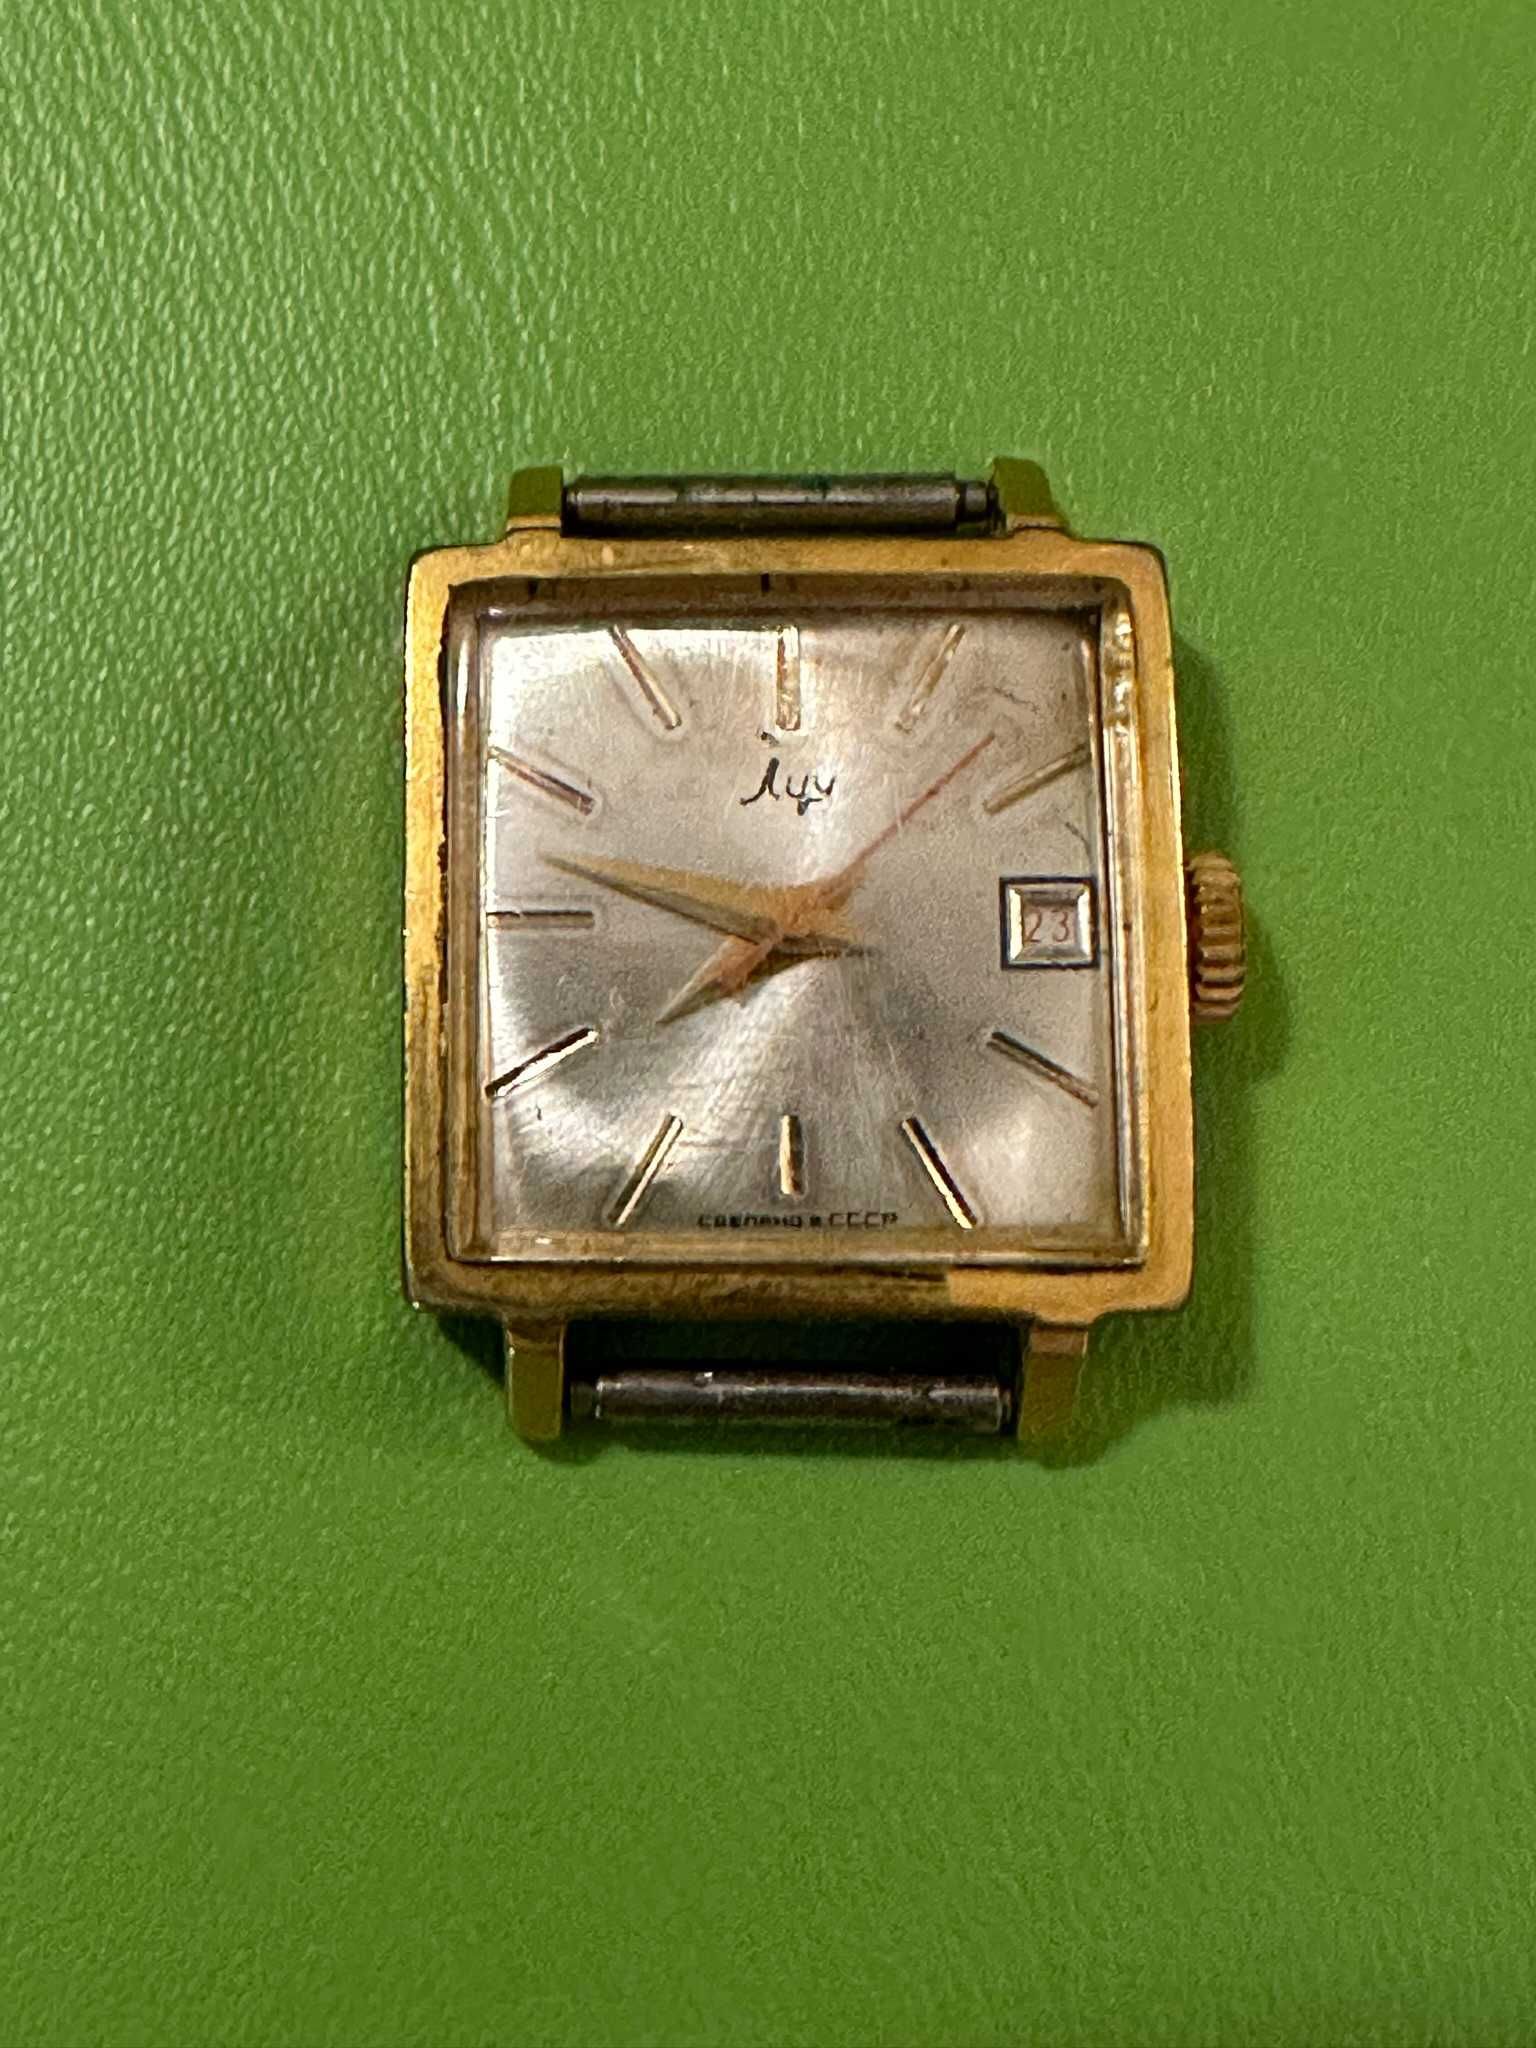 Zegarek Łucz Made in ZSRR okres PRL vintage